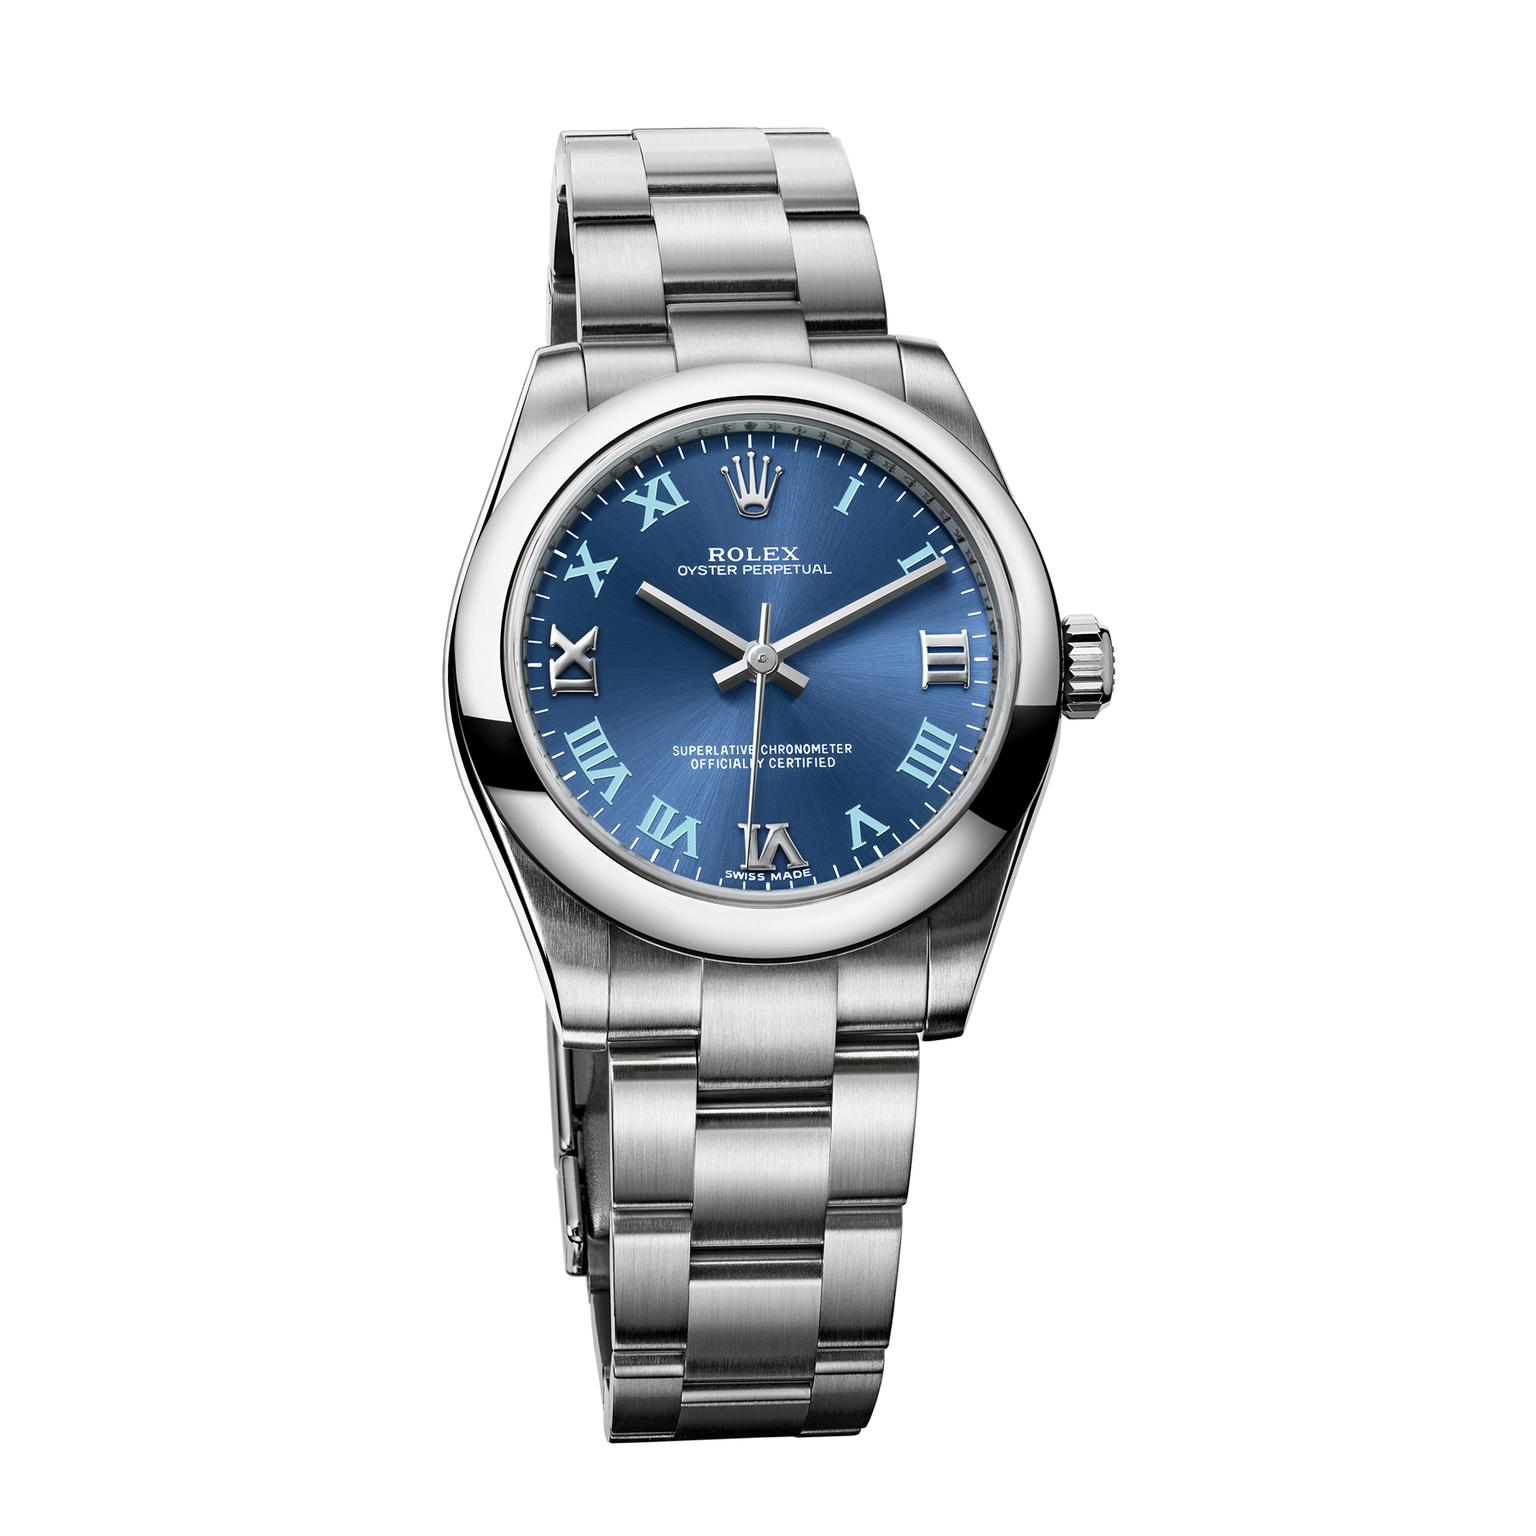 rolex women's stainless steel watch